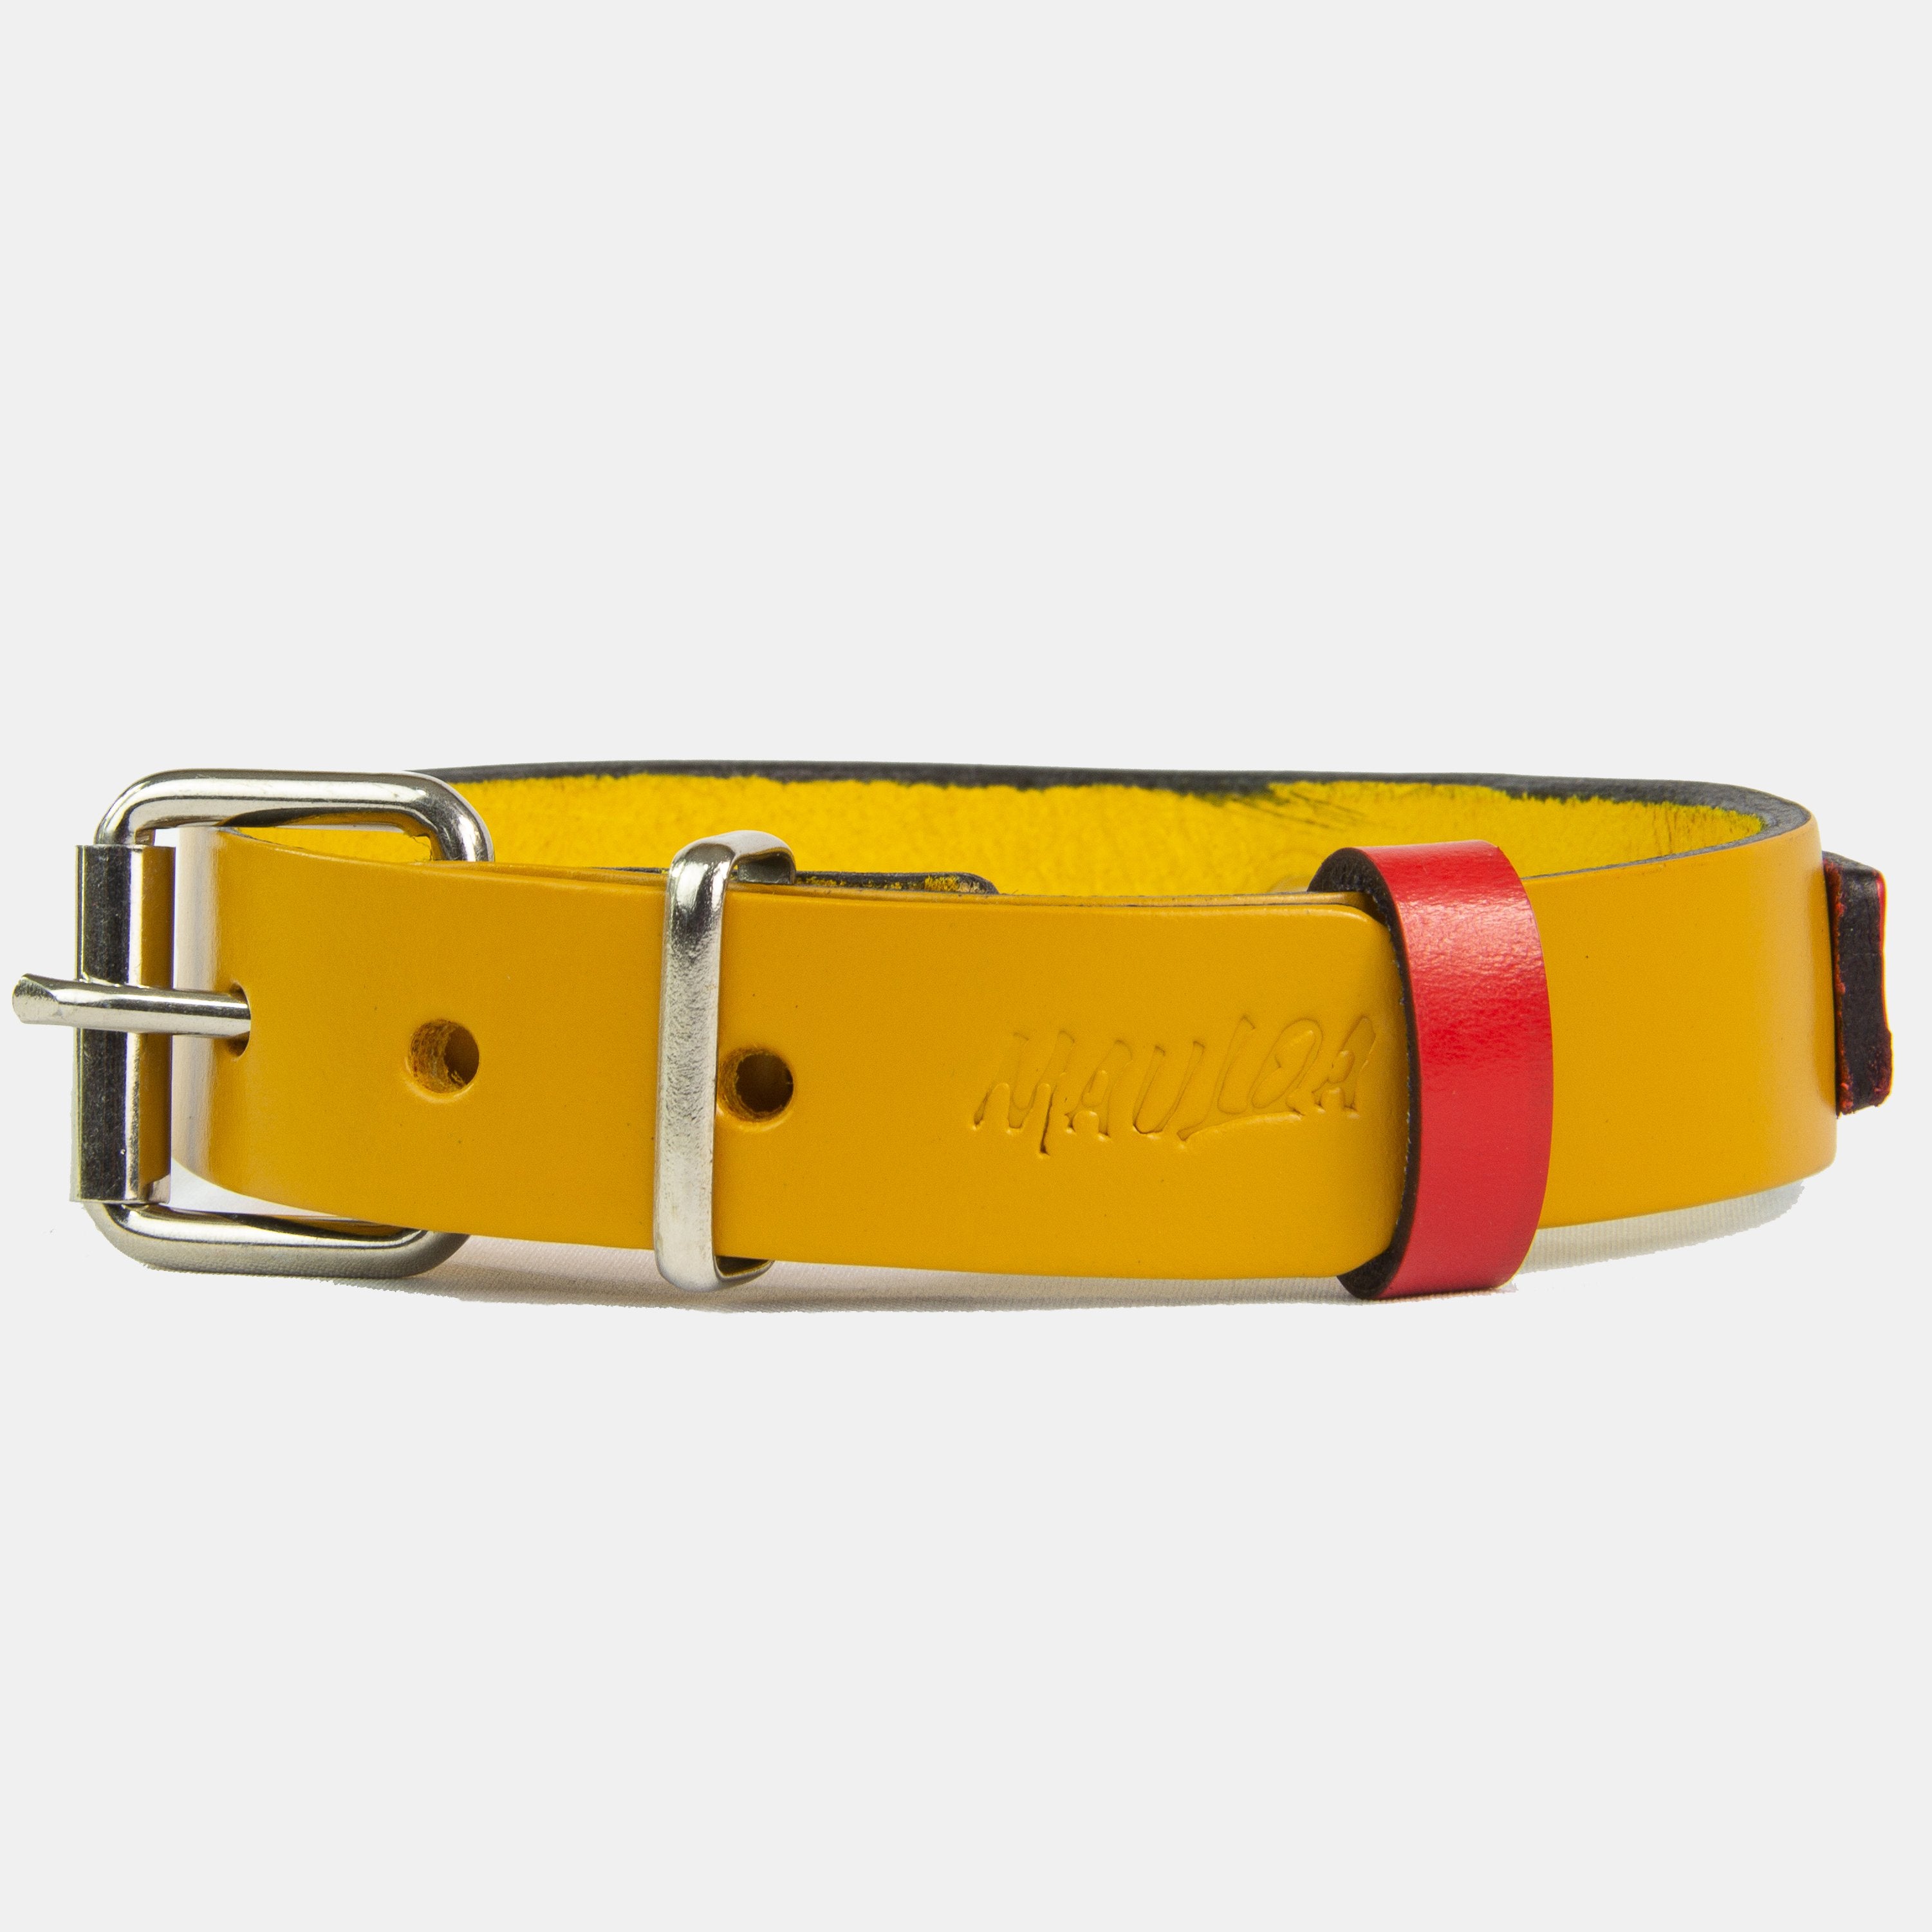 Collar para perros Mauloa, hecho en cuero, modelo Duke, color Amarillo con Rojo